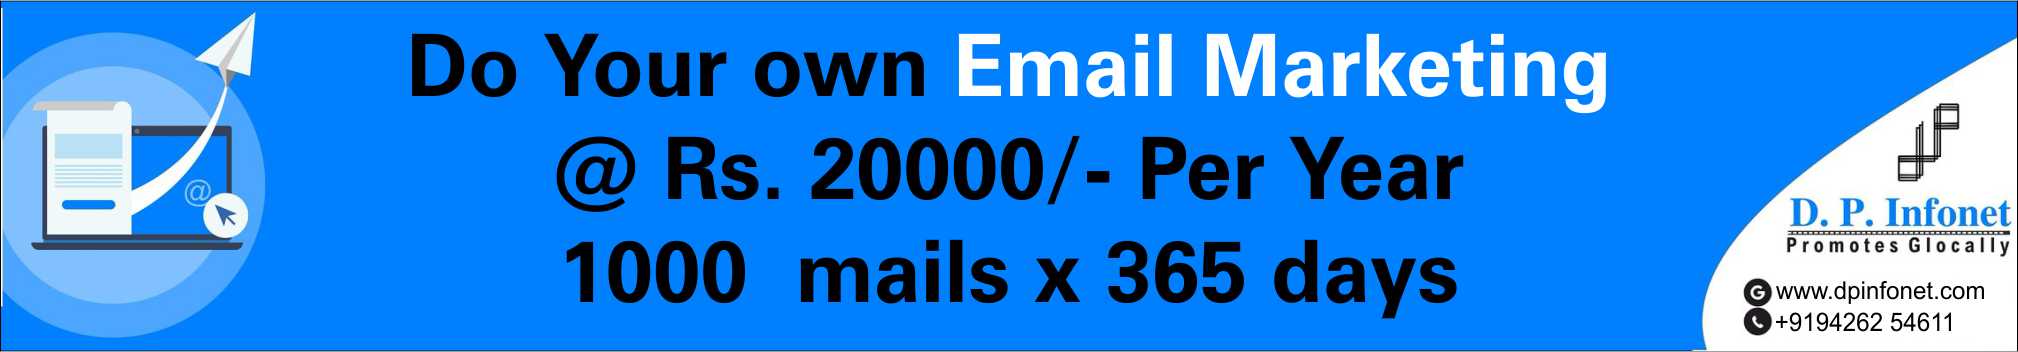 D. P.Infonet Email Marketing.jpg